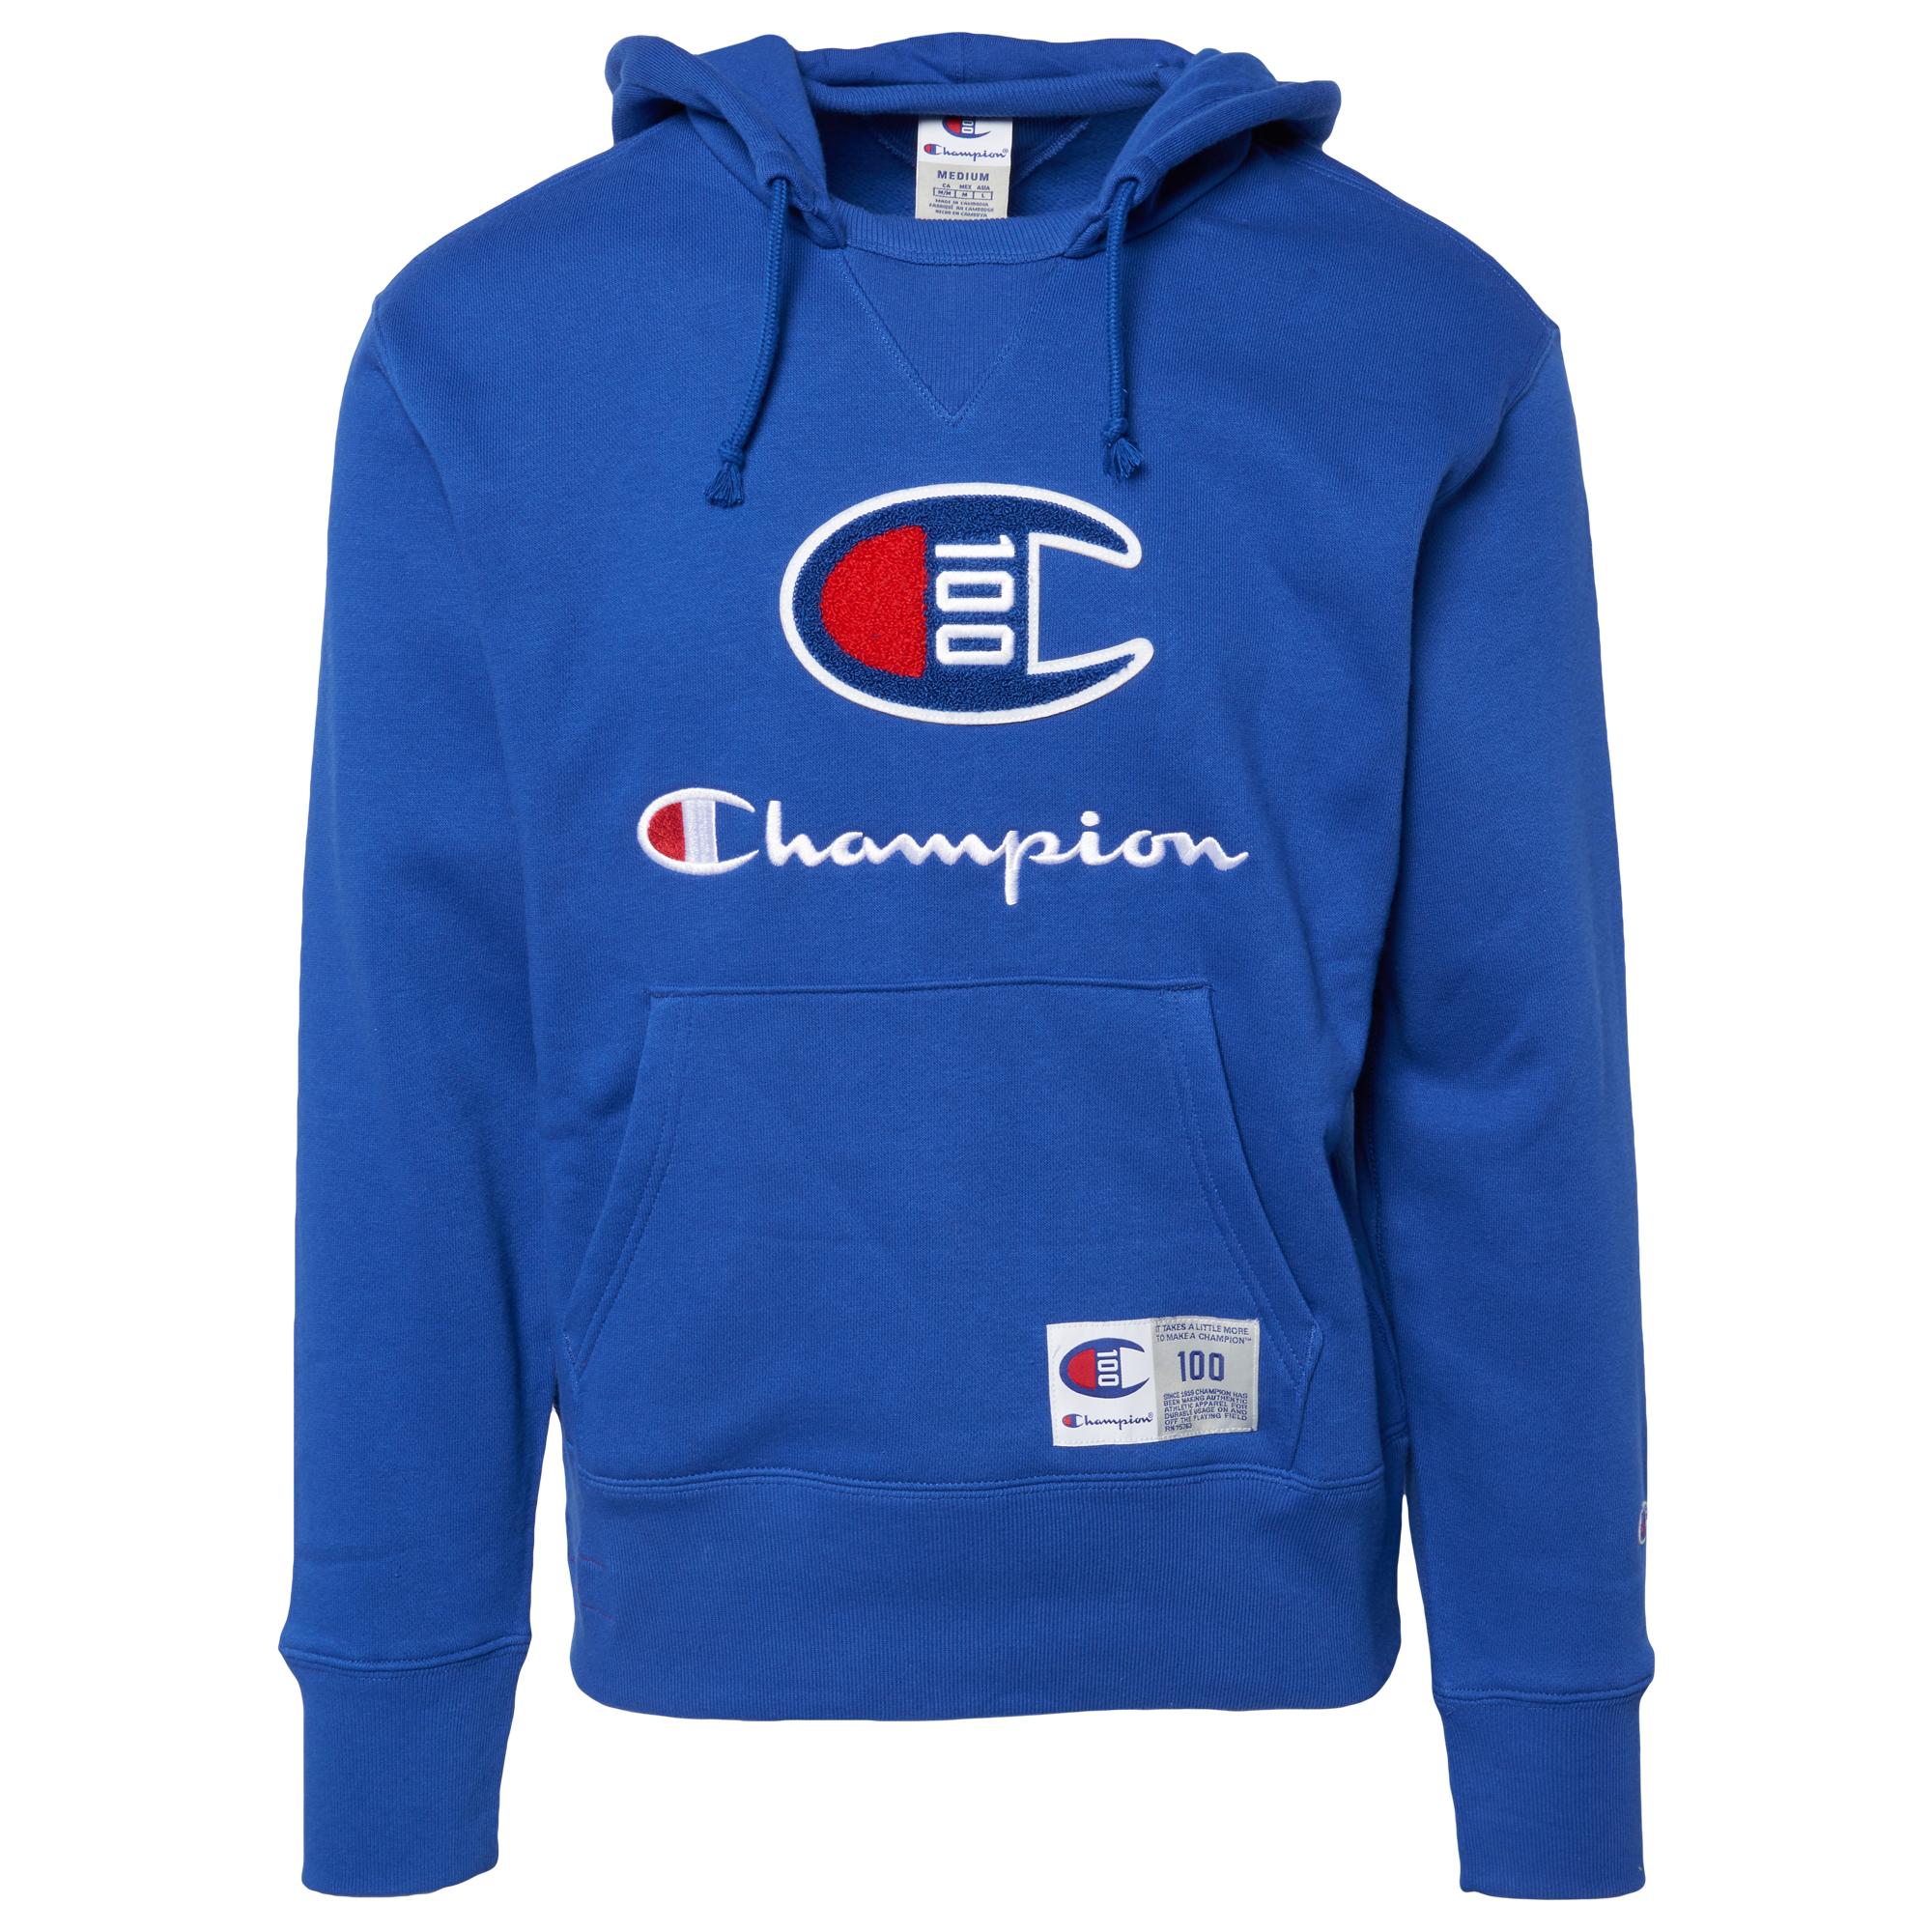 Champion Cotton Century Pullover Hoodie Sweatshirt in Blue for Men - Lyst